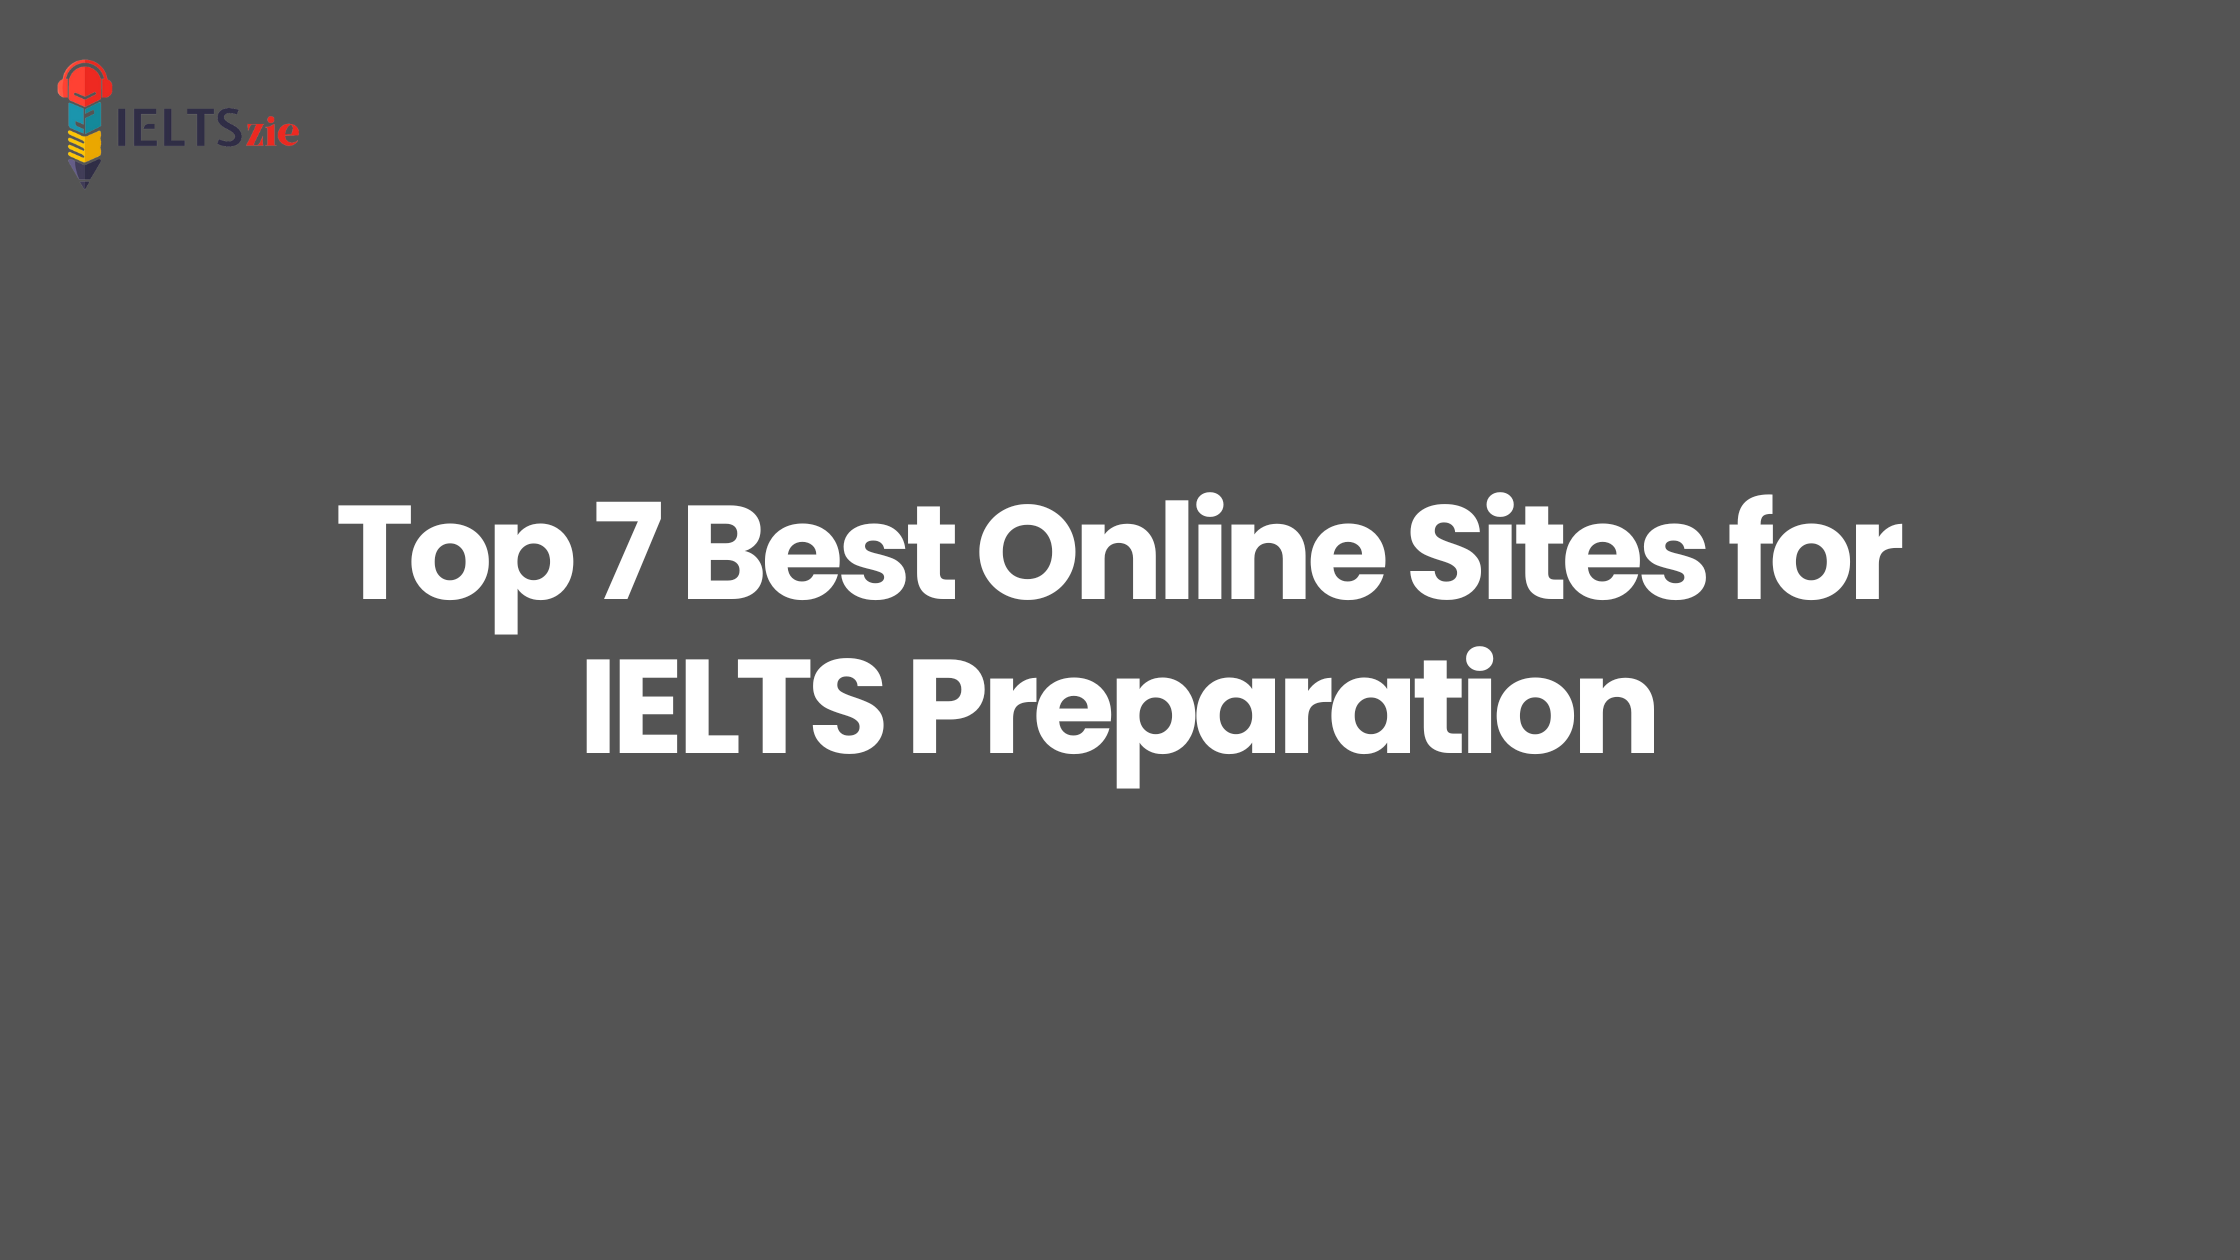 Top 7 Best Online Sites for IELTS Preparation